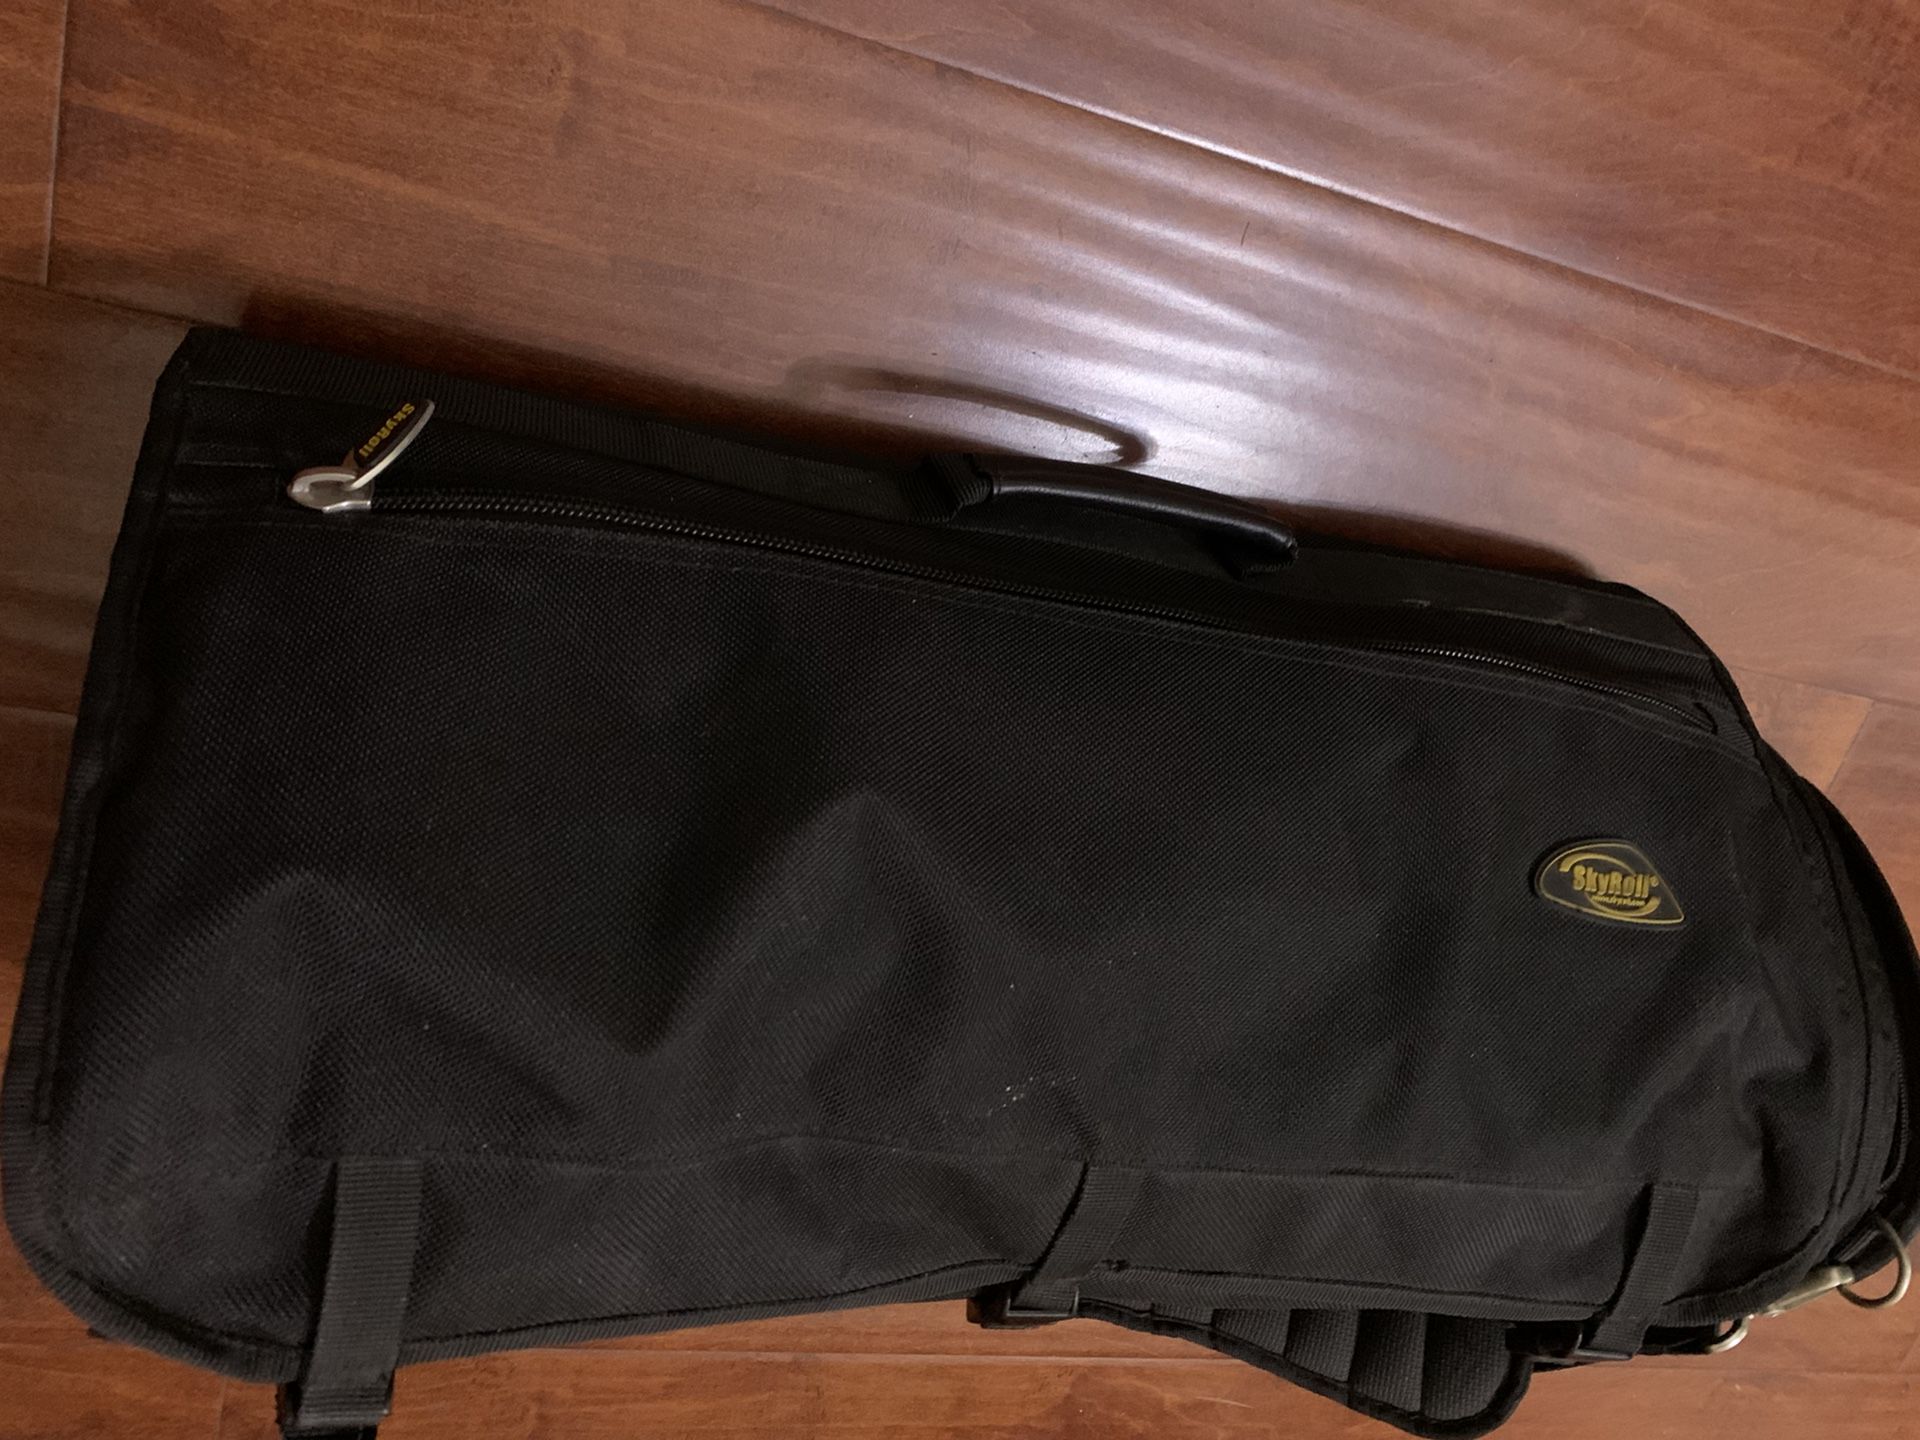 Skyroll 24" Roll Up Garment Travel  Lp km Bag Carry On Luggage Black Read